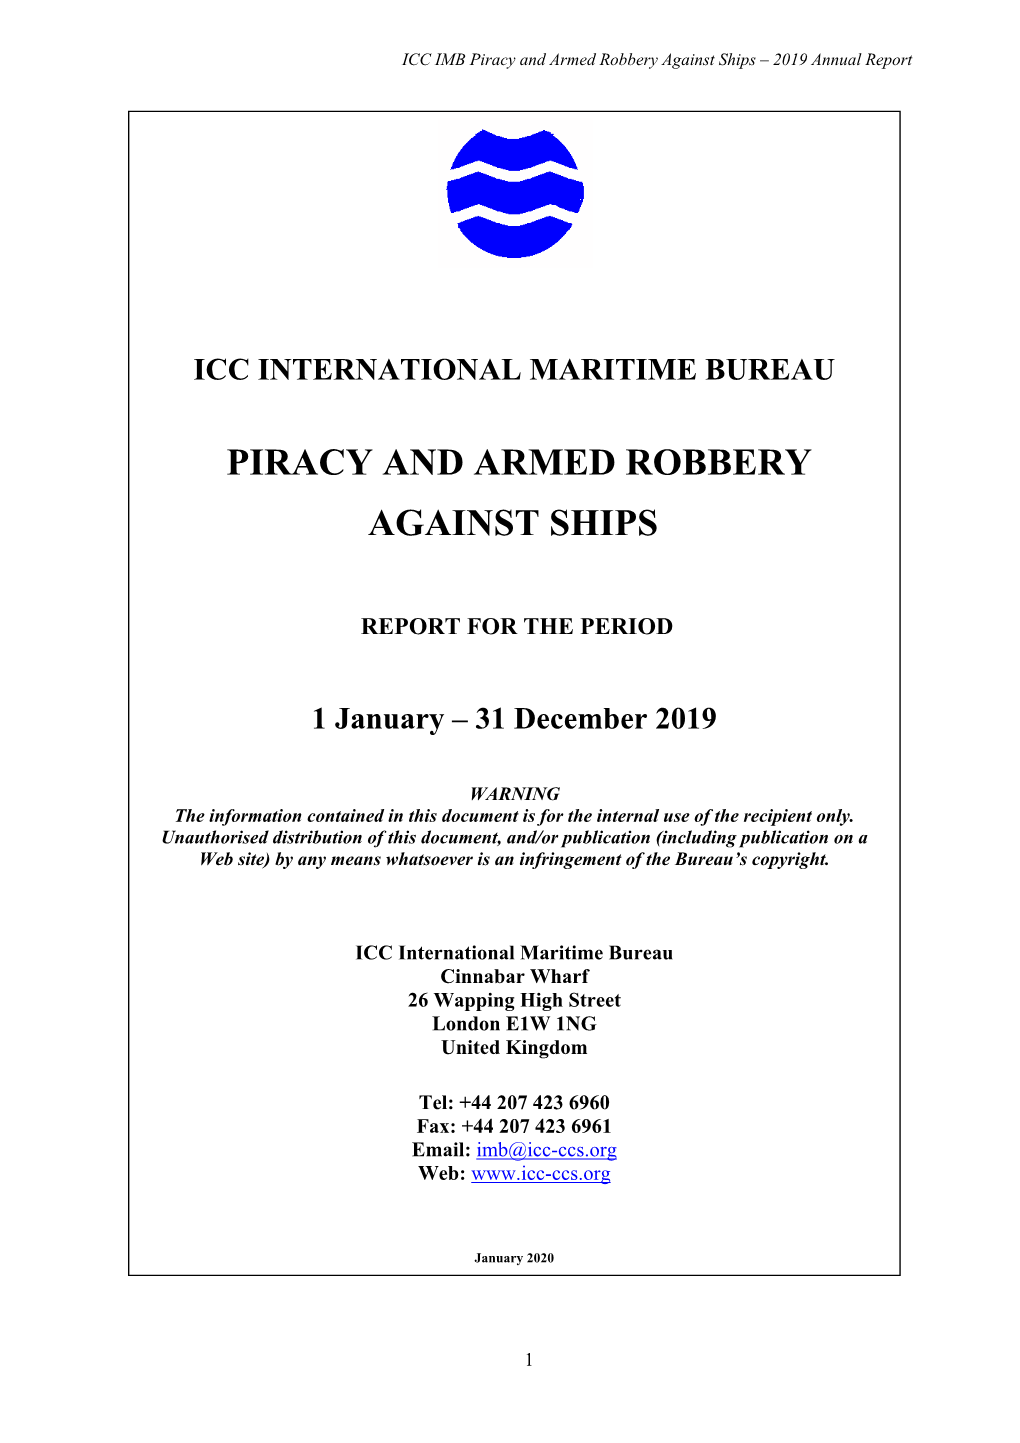 Icc International Maritime Bureau Piracy and Armed Robbery Against